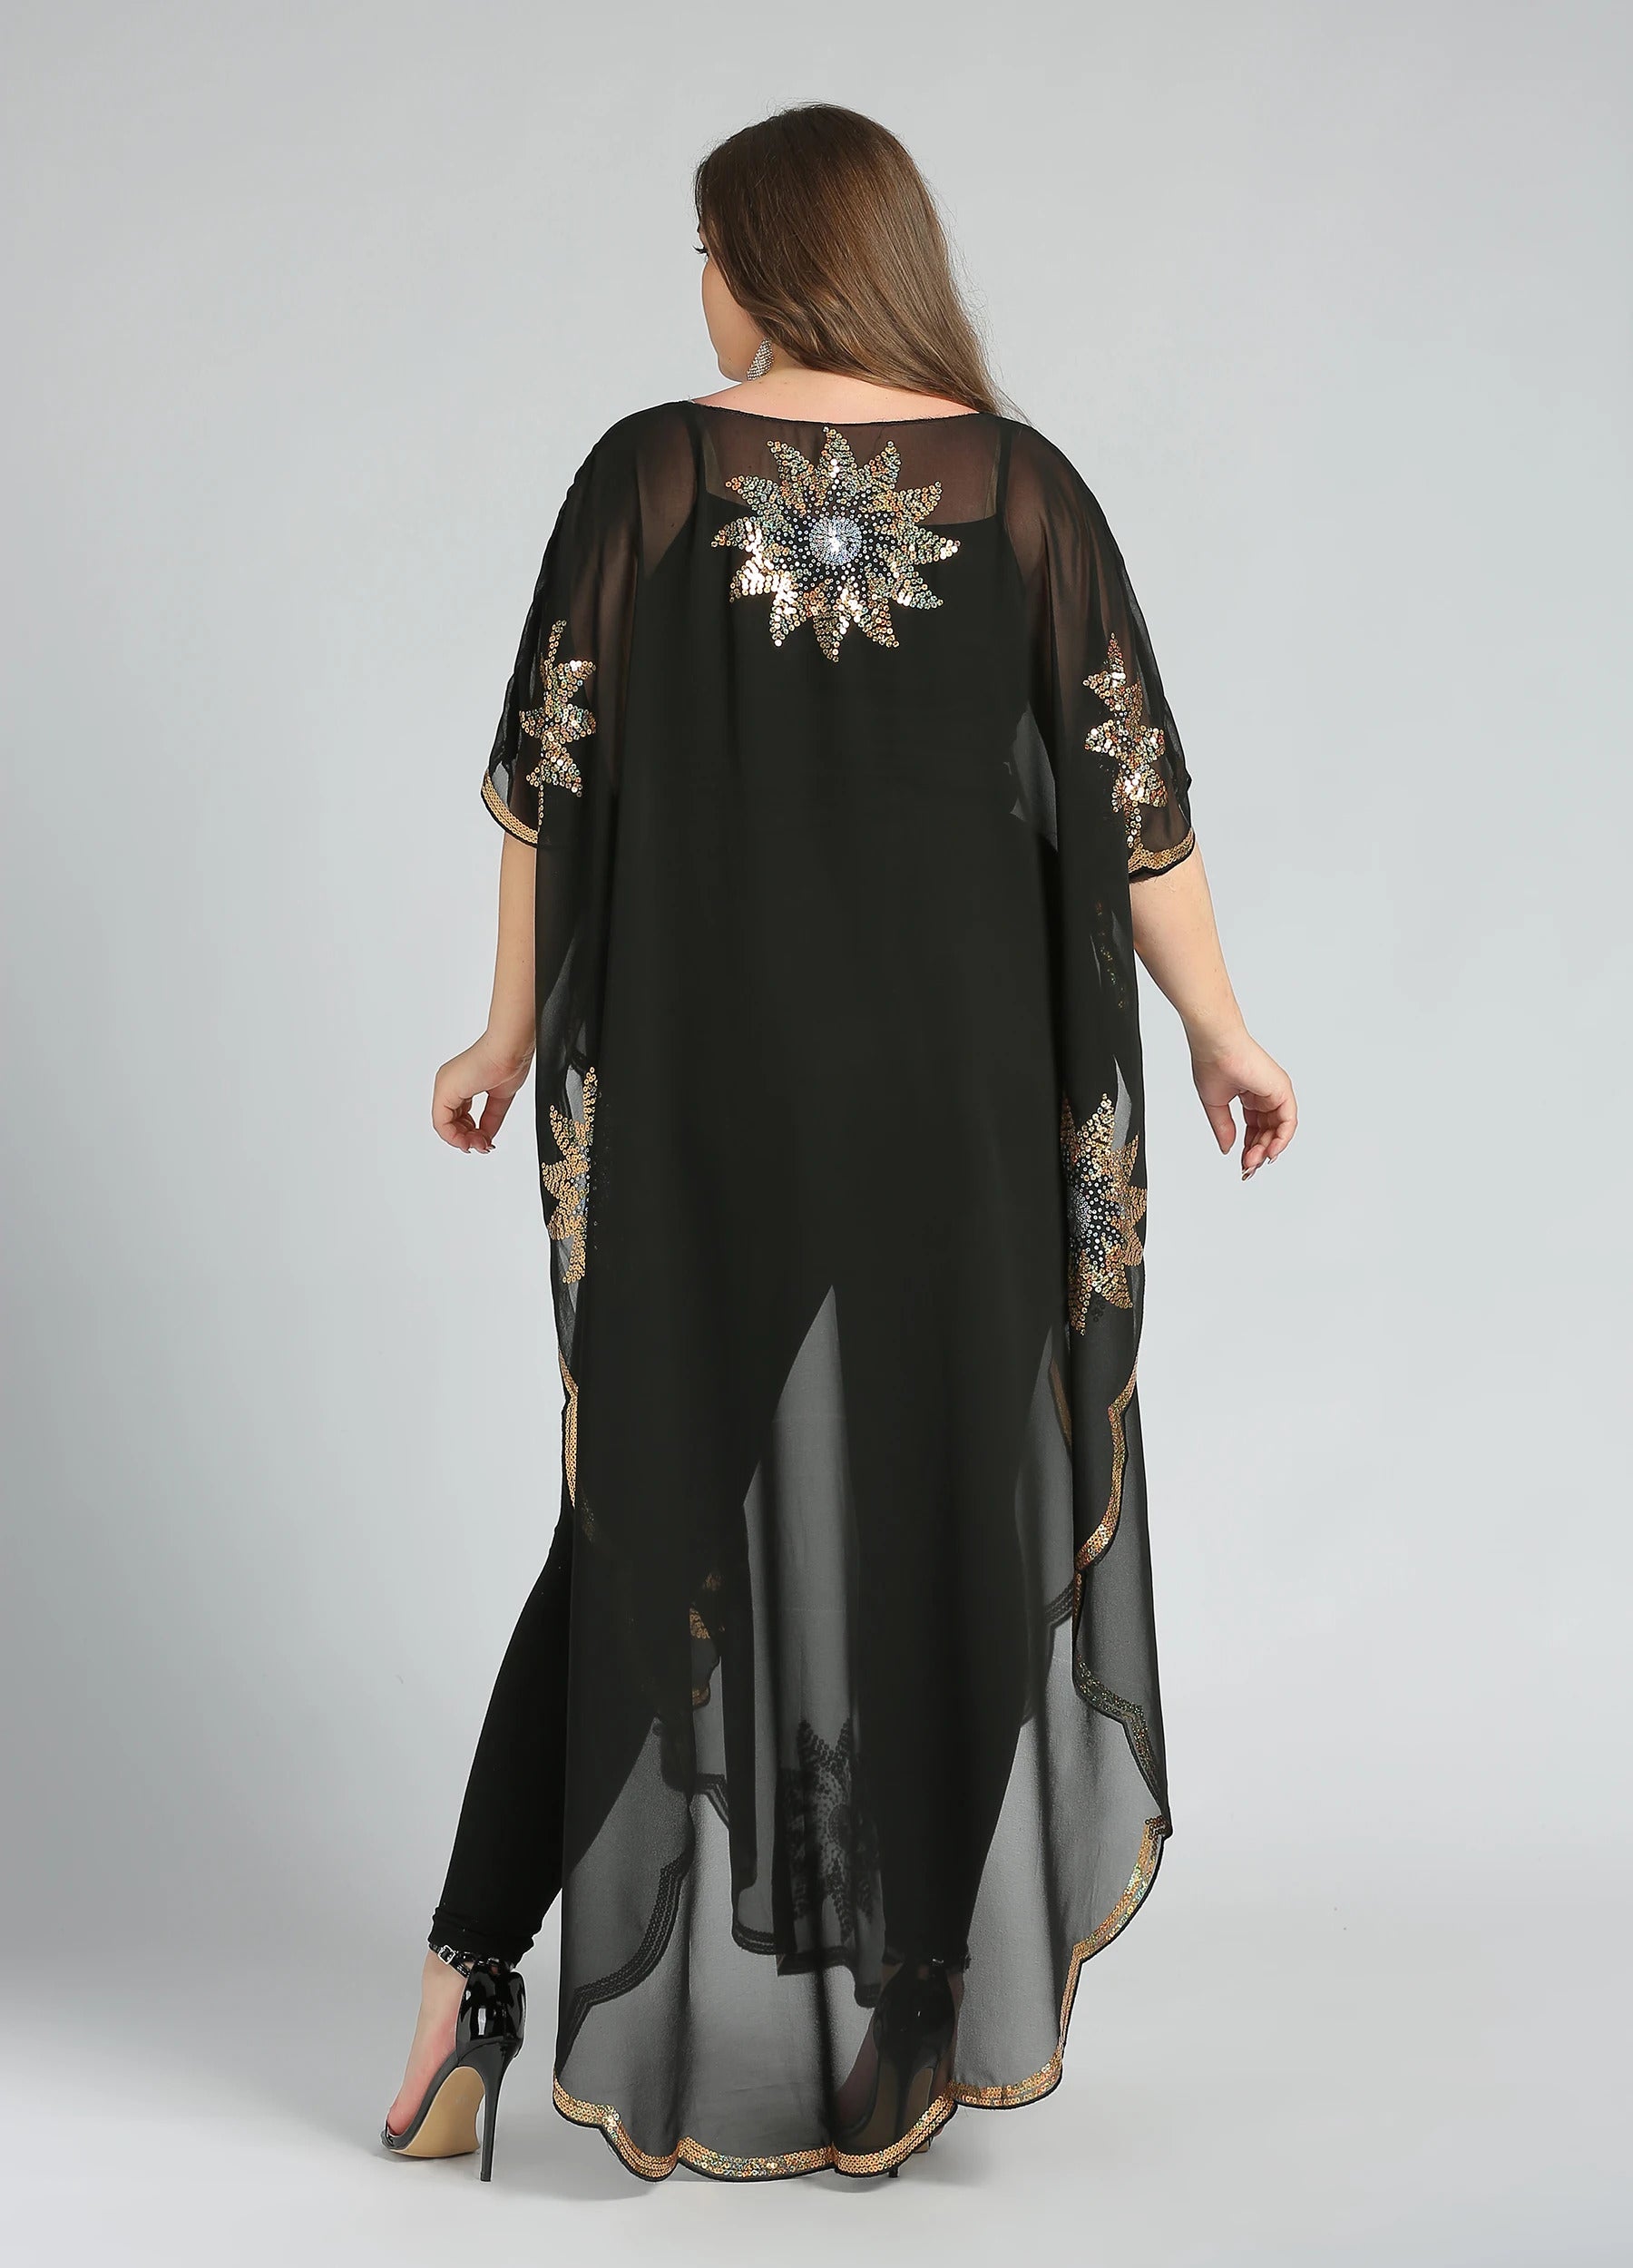 MECALA-Women's Round Neck Half Sleeve Floral Sequin Glitter Kaftan-Black back view